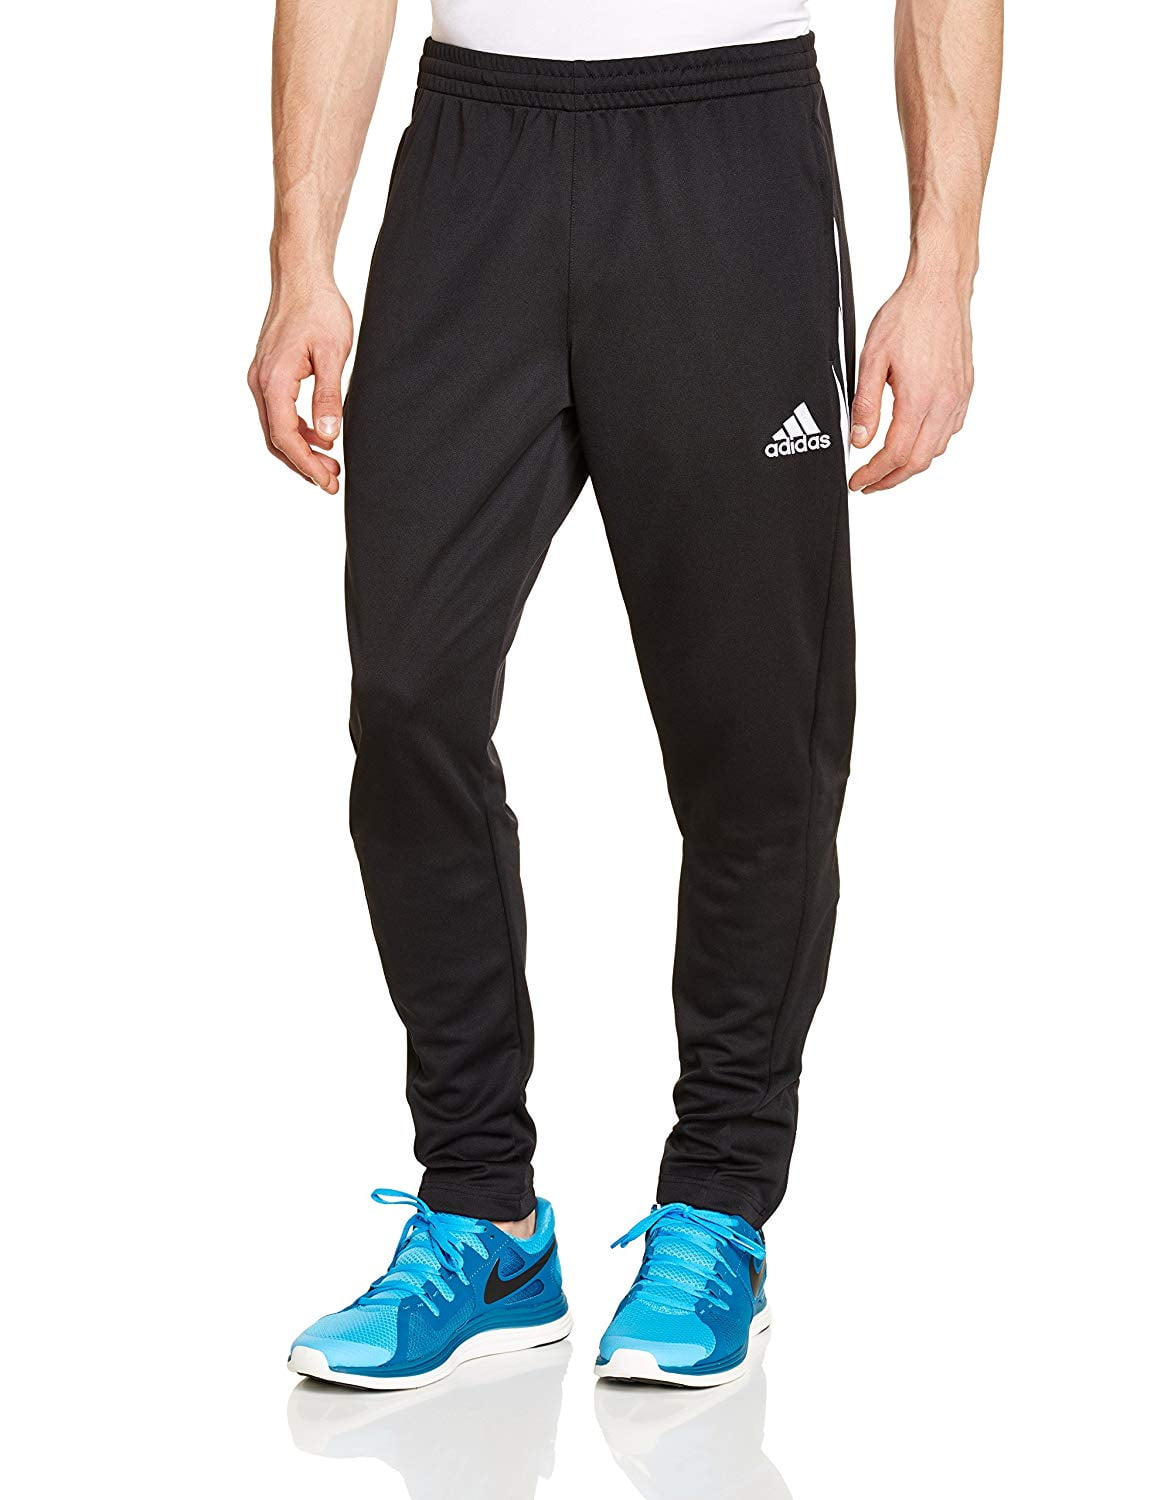 Adidas Sereno 14 Training Pants in Black | Walmart Canada